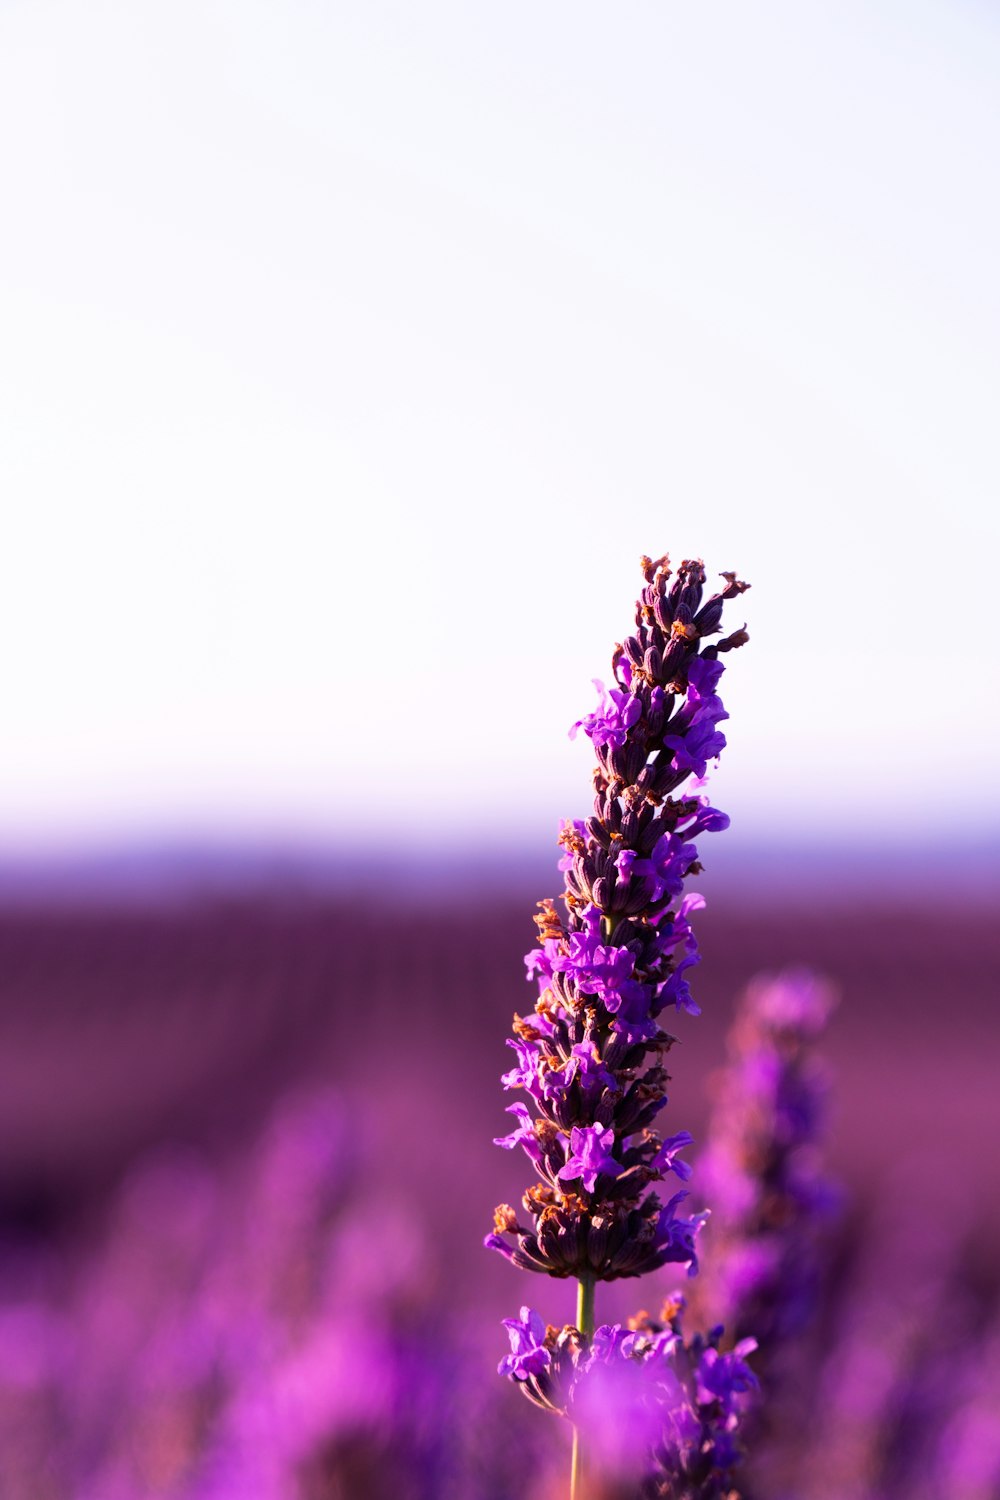 flor púrpura en lente de cambio de inclinación